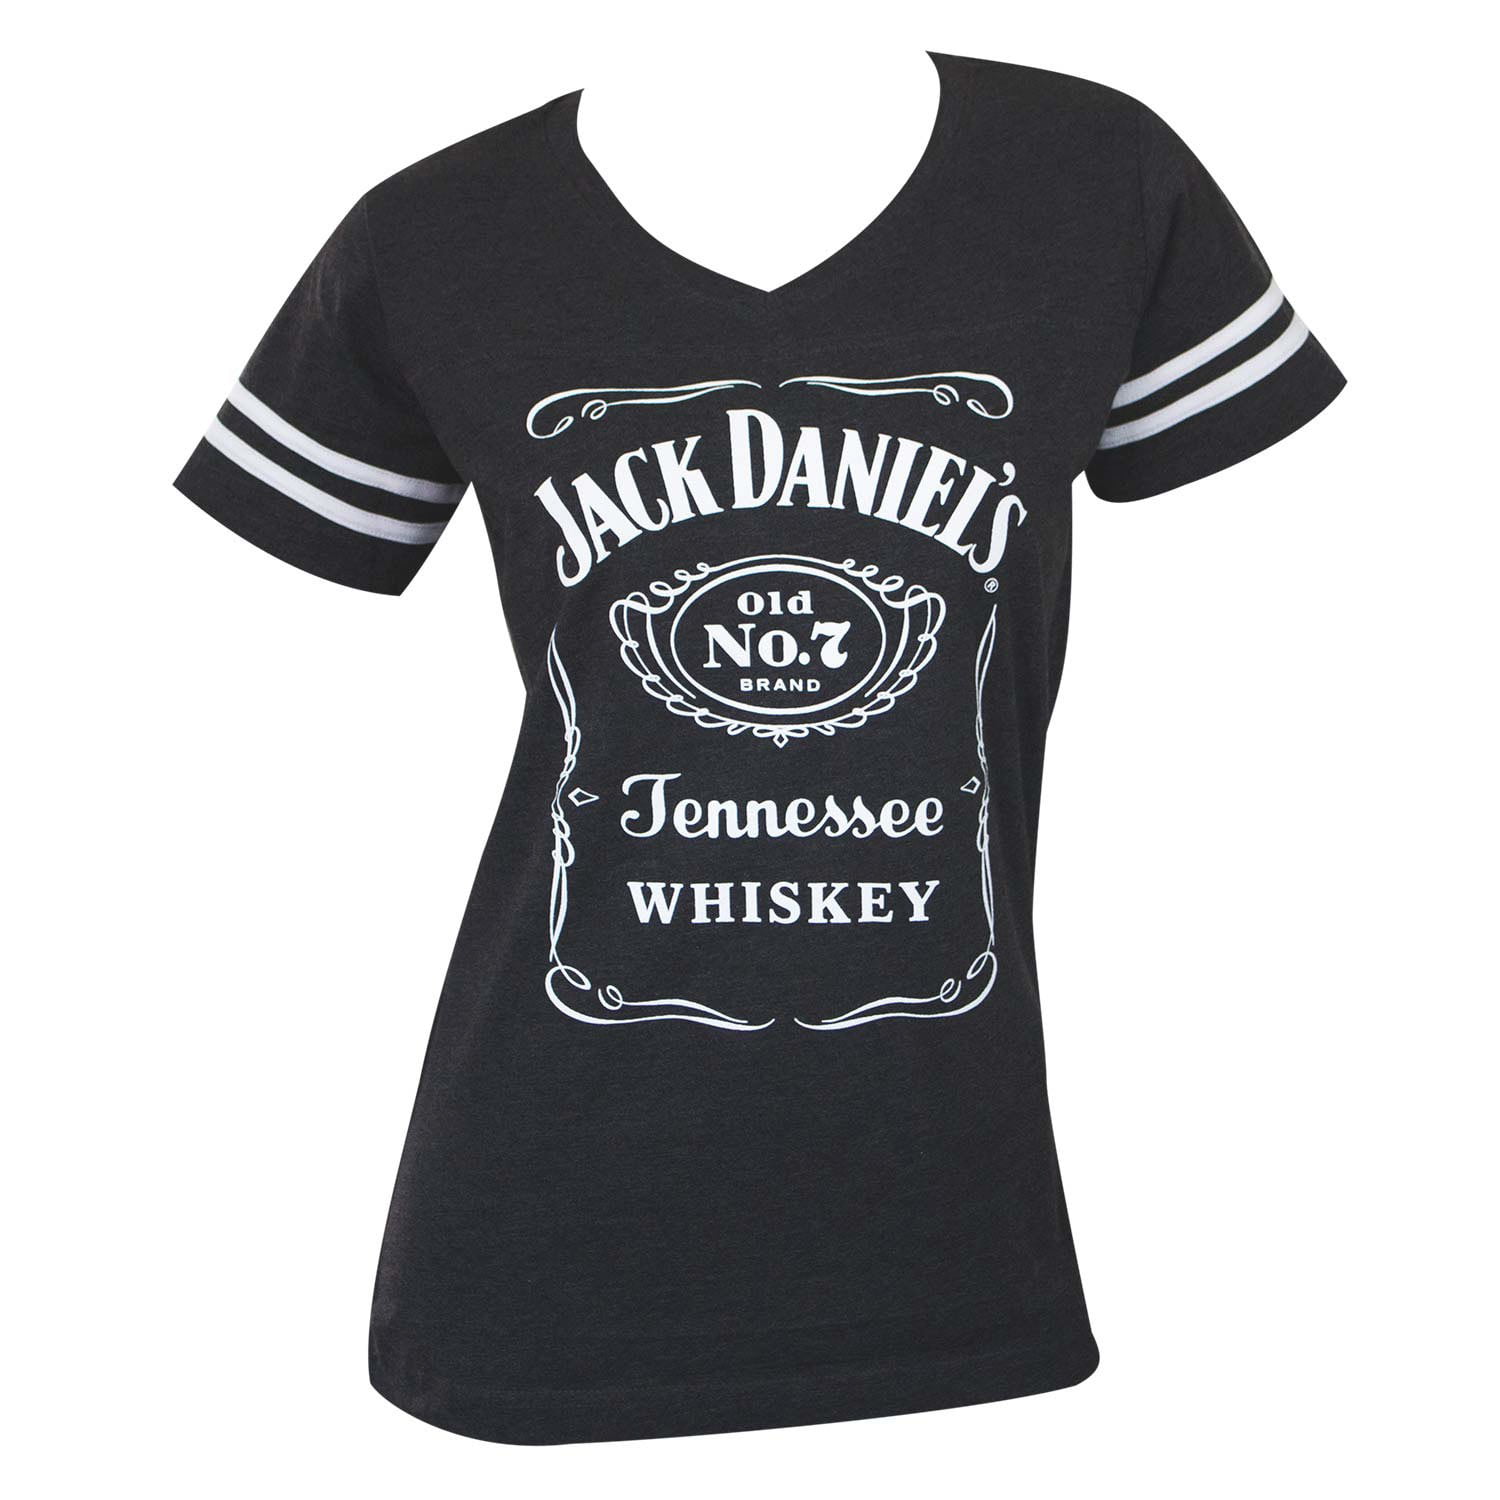 Jack Daniels Women's Gray Striped Sleeve Soccer T-Shirt-Large - Walmart.com